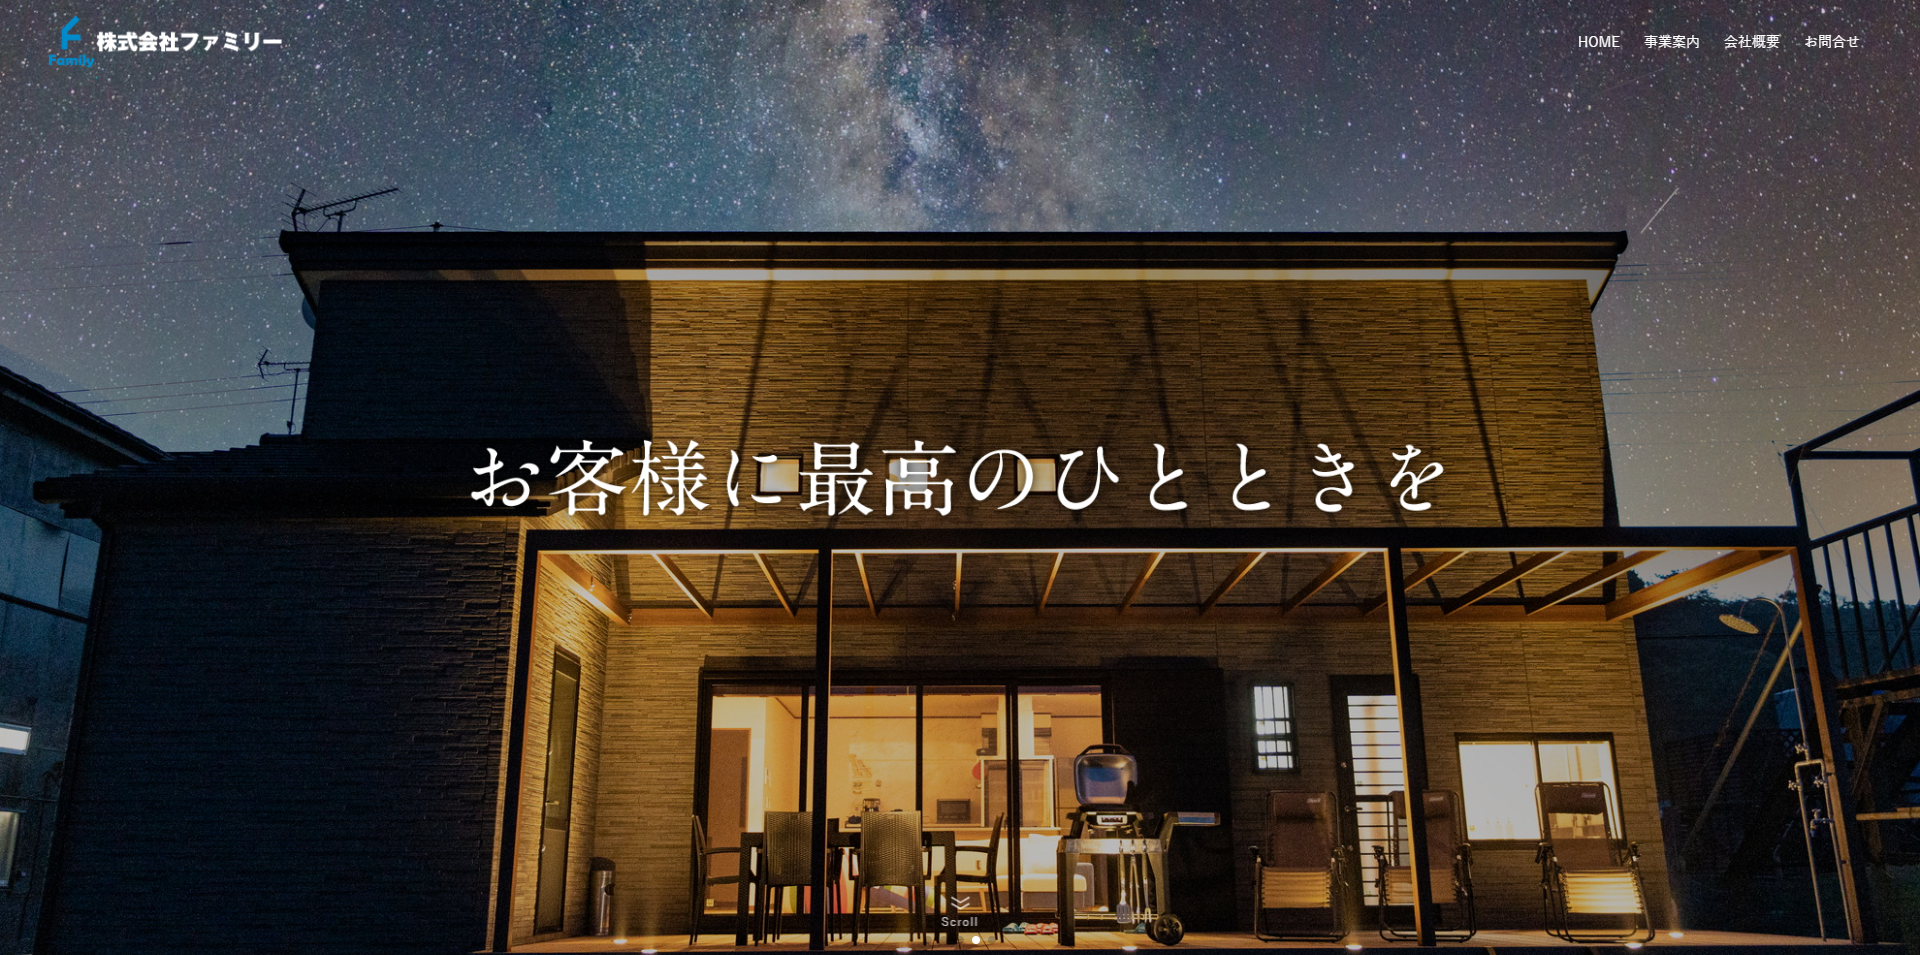 FireShot Capture 125 - 株式会社ファミリー - イベント企画、運営。飲食店のケータリングを行っています。 - family-chiba.jp